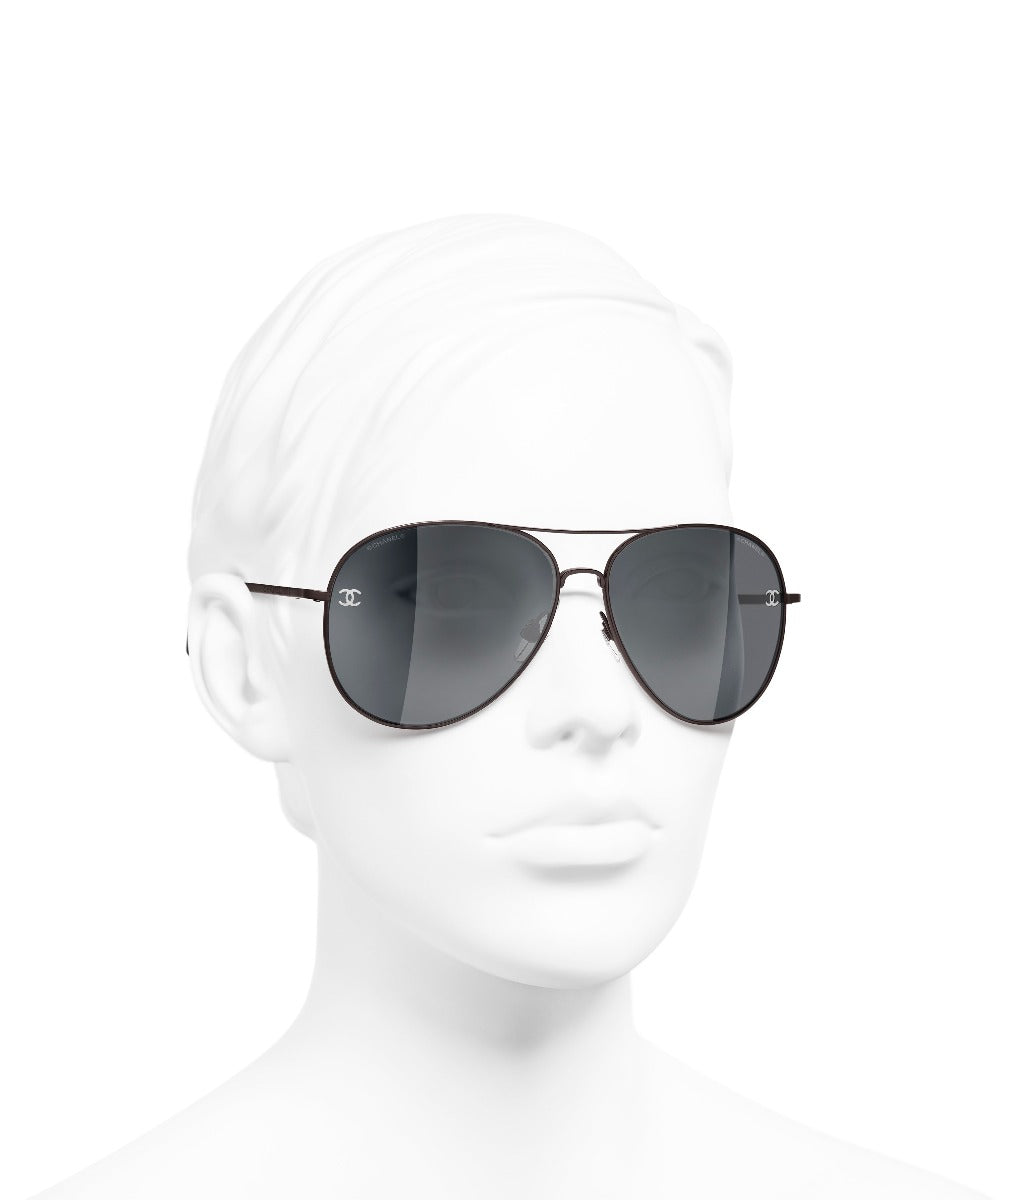 Chanel sunglasses case glasses - Gem